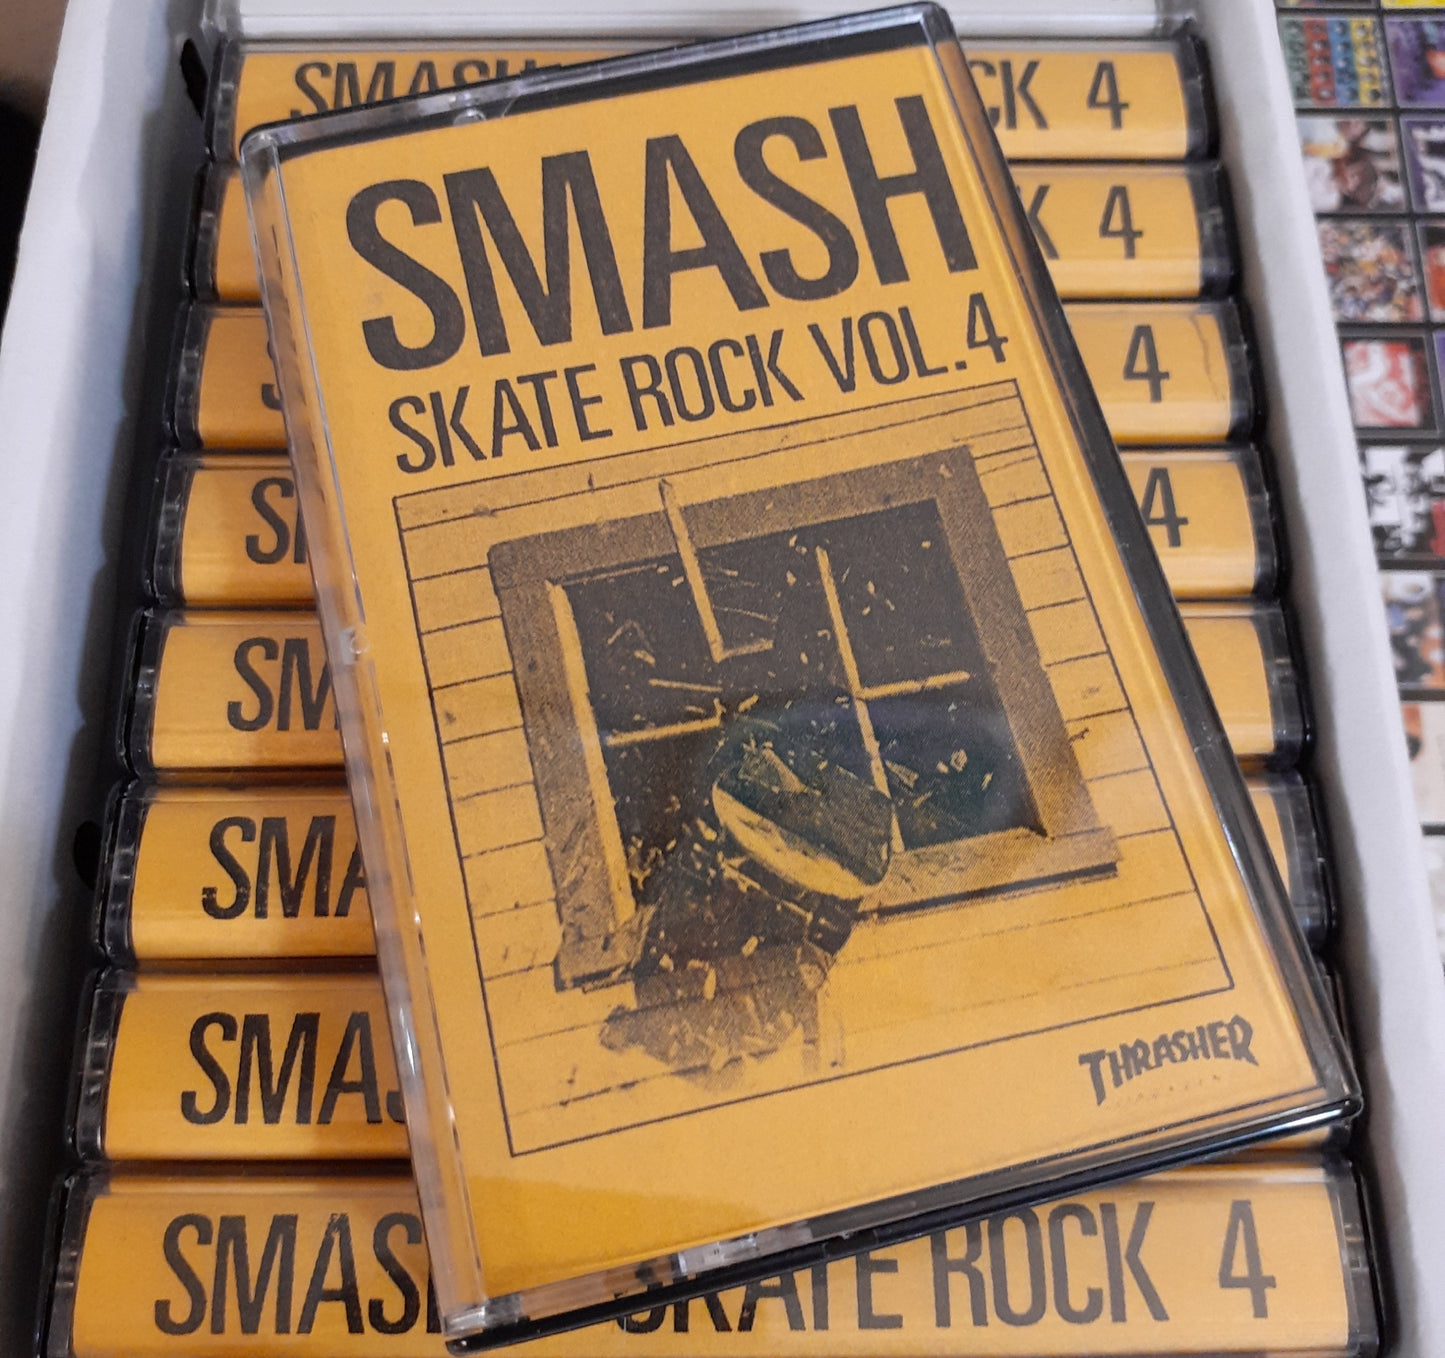 V/A - "SMASH" Skate Rock Vol. 4 Cassette (LAST COPY!)